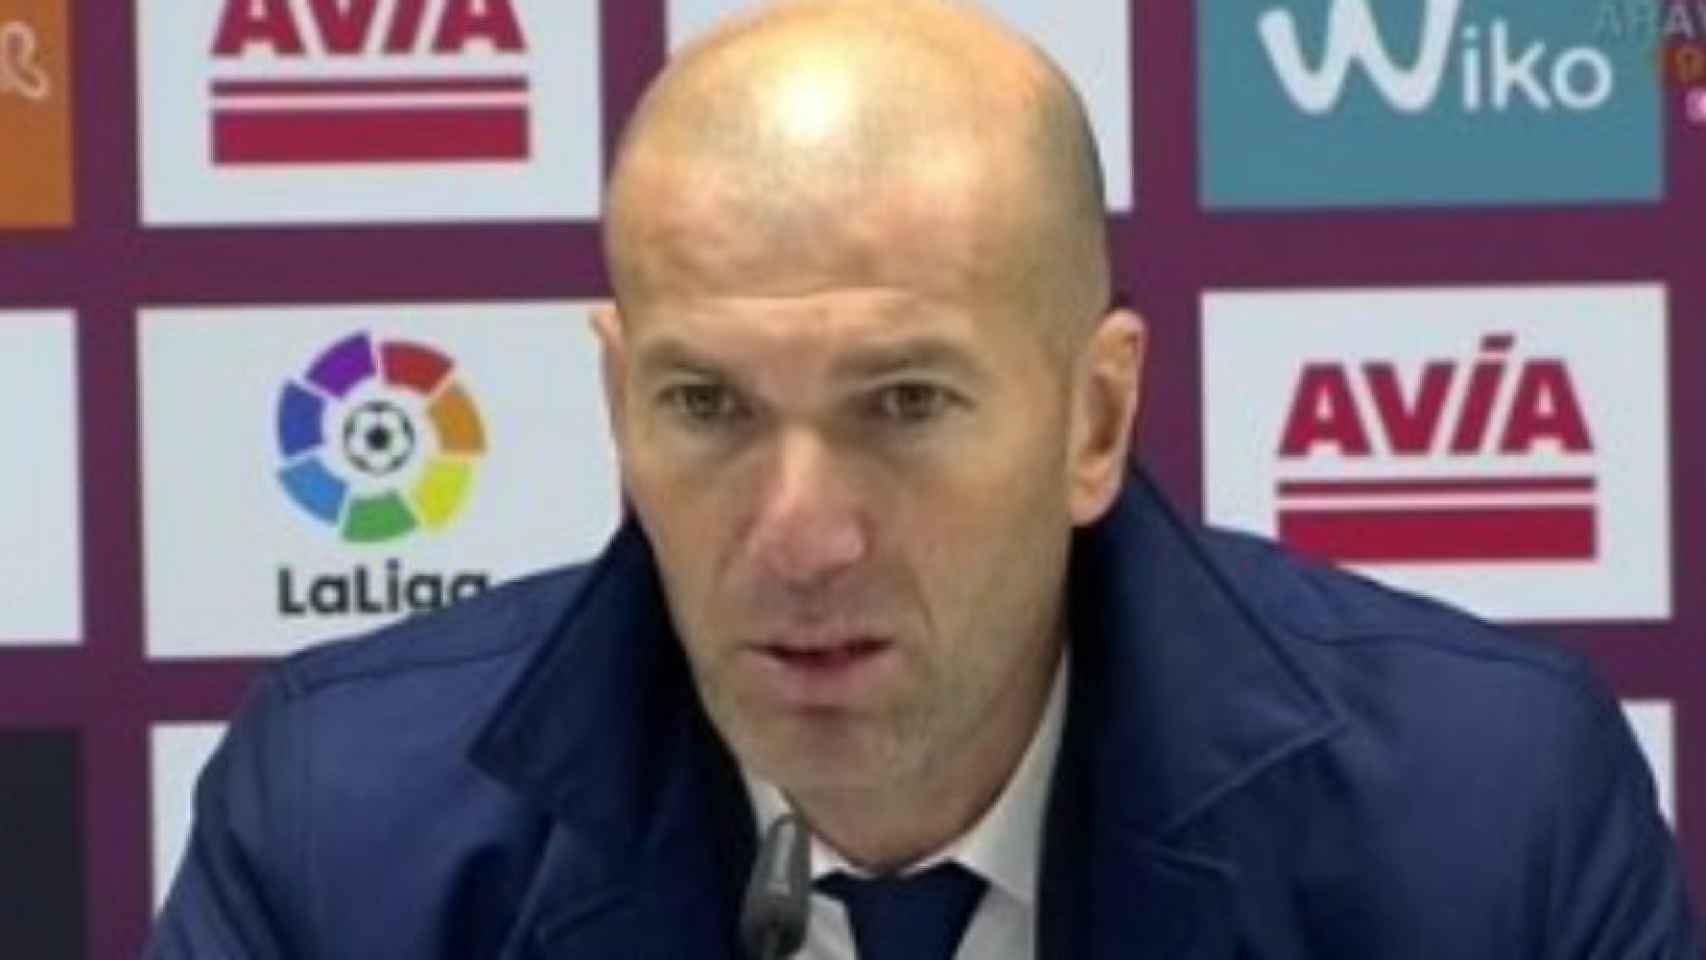 Zidane, en rueda de prensa en Ipurua